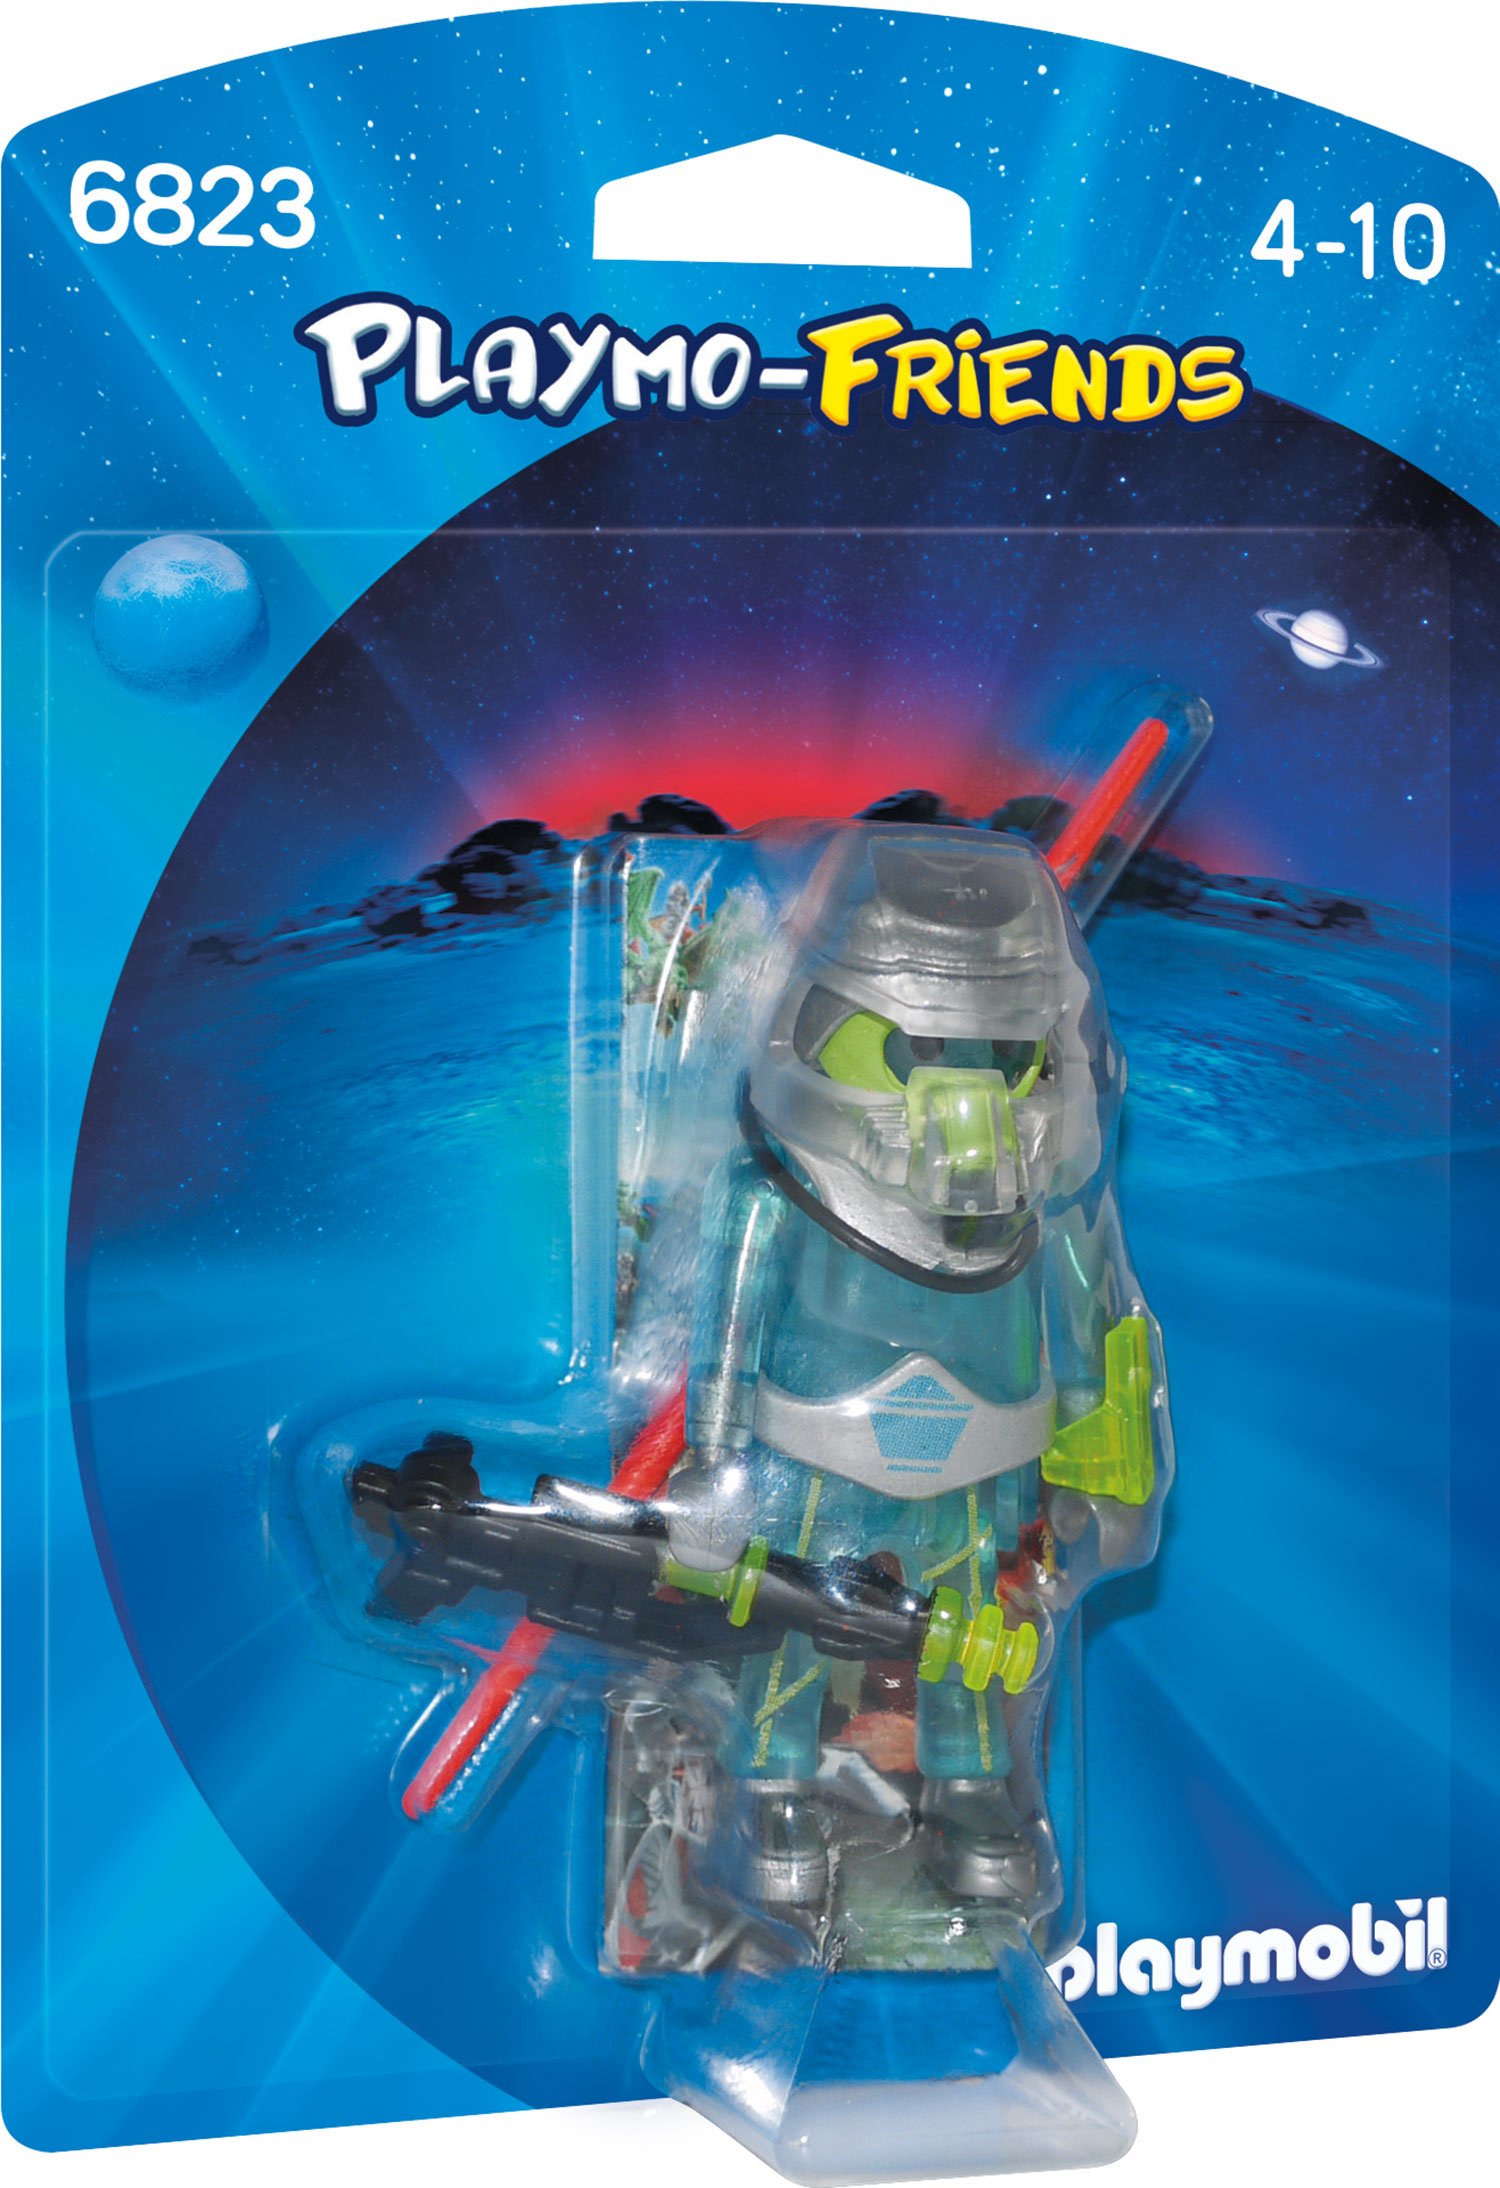 Playmobil Playmo Friends Space Warrior Figure